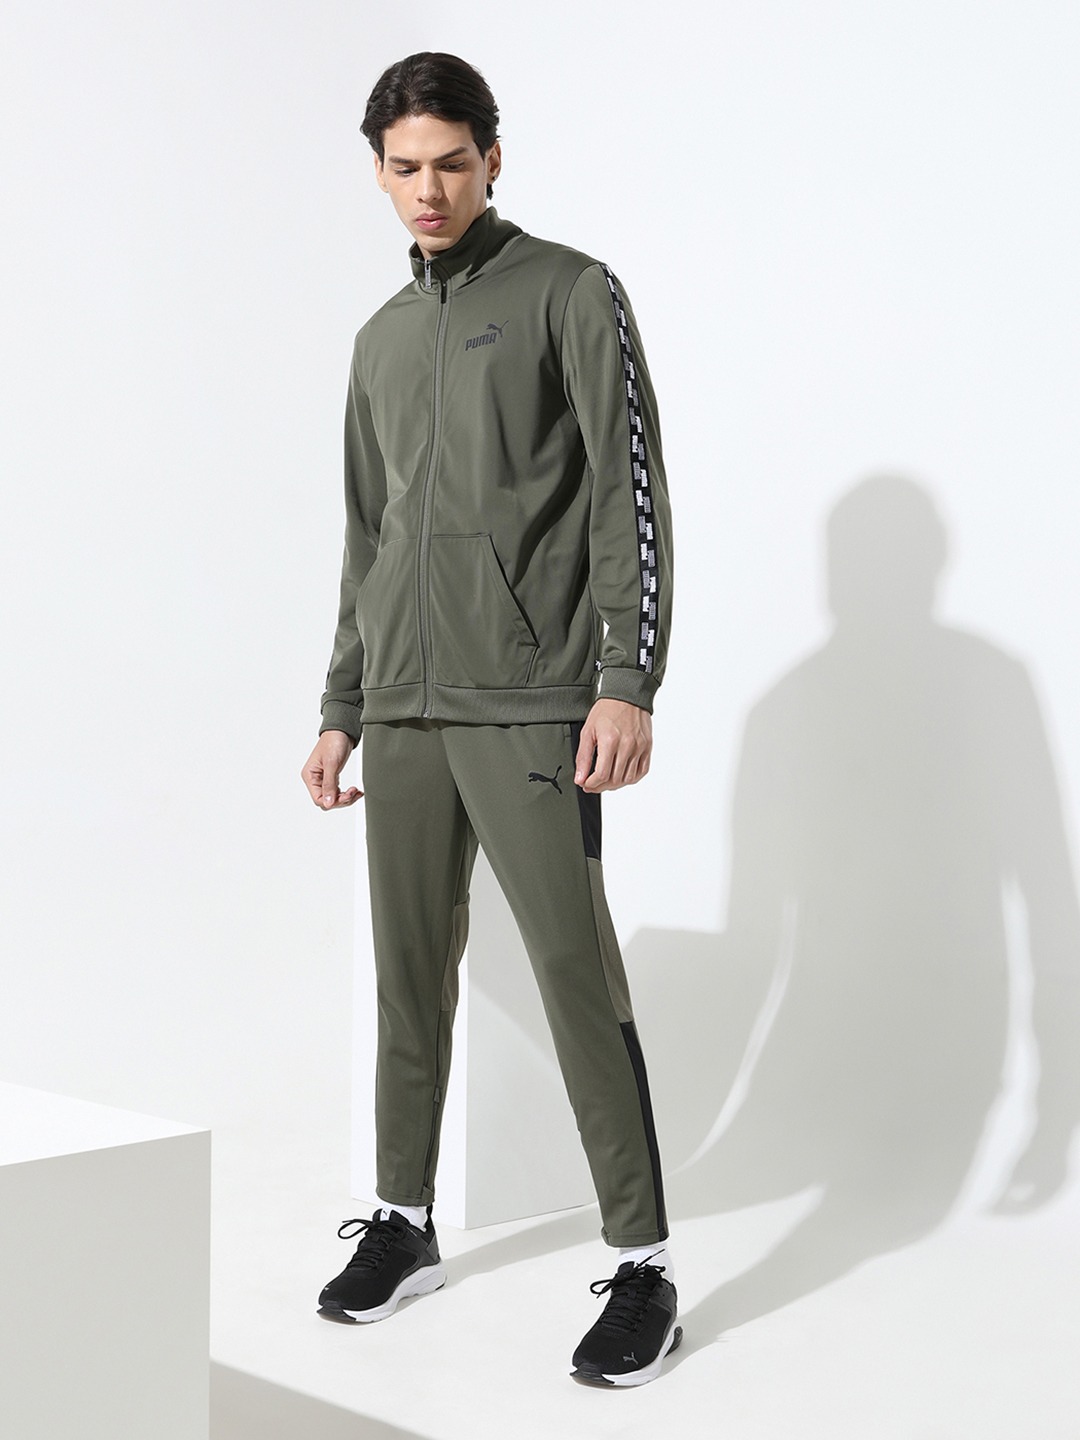 Clothing Tracksuits | Puma Men Olive Green Regular Fit Track Suit - OU57318